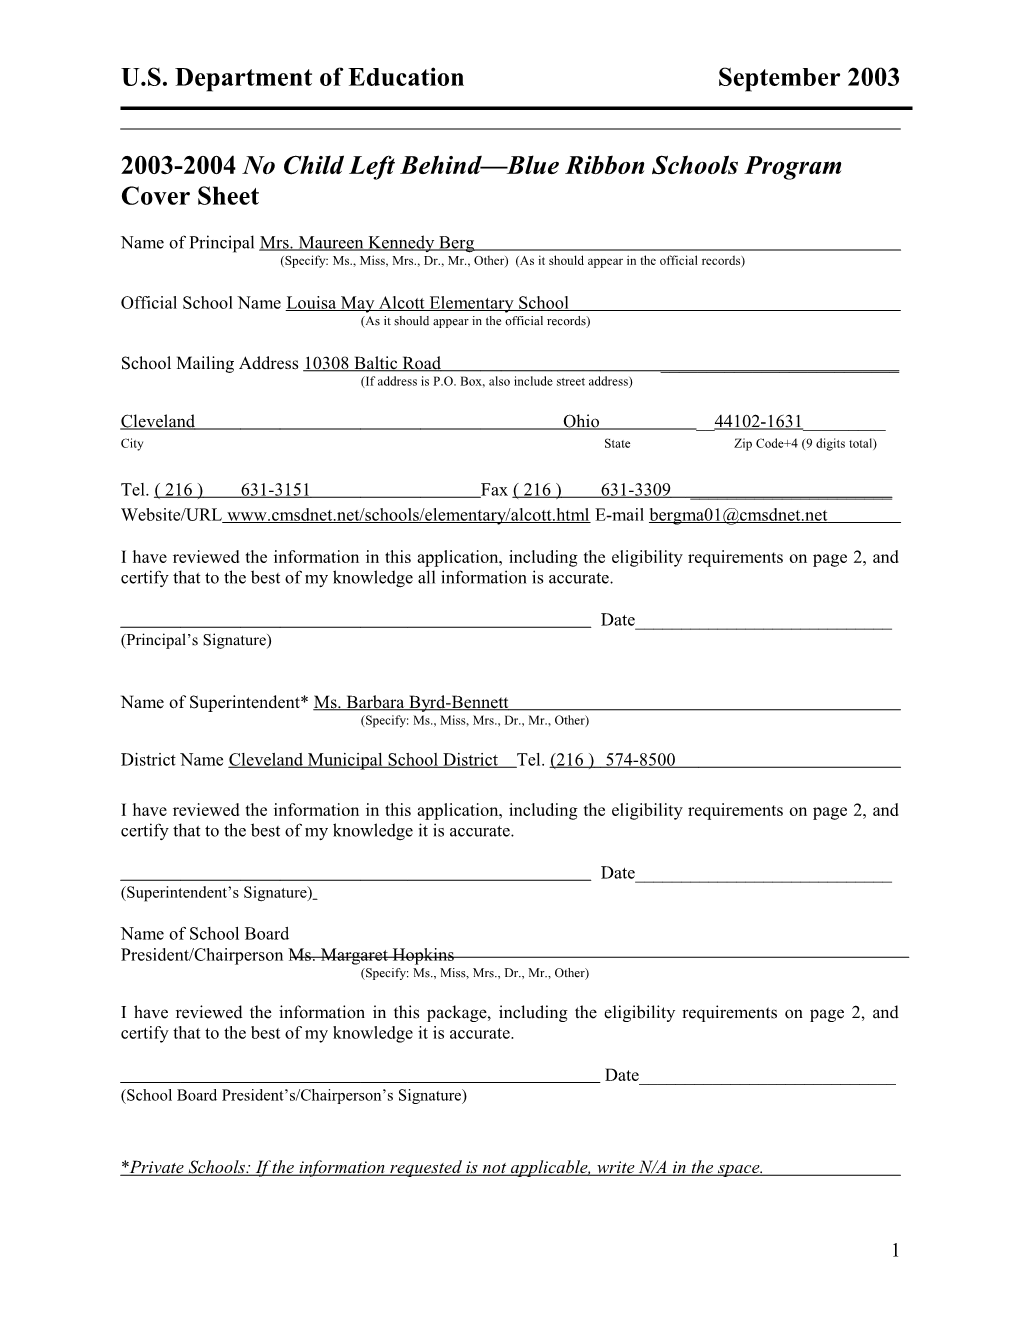 Louisa May Alcott Elementary School 2004 No Child Left Behind-Blue Ribbon School Application